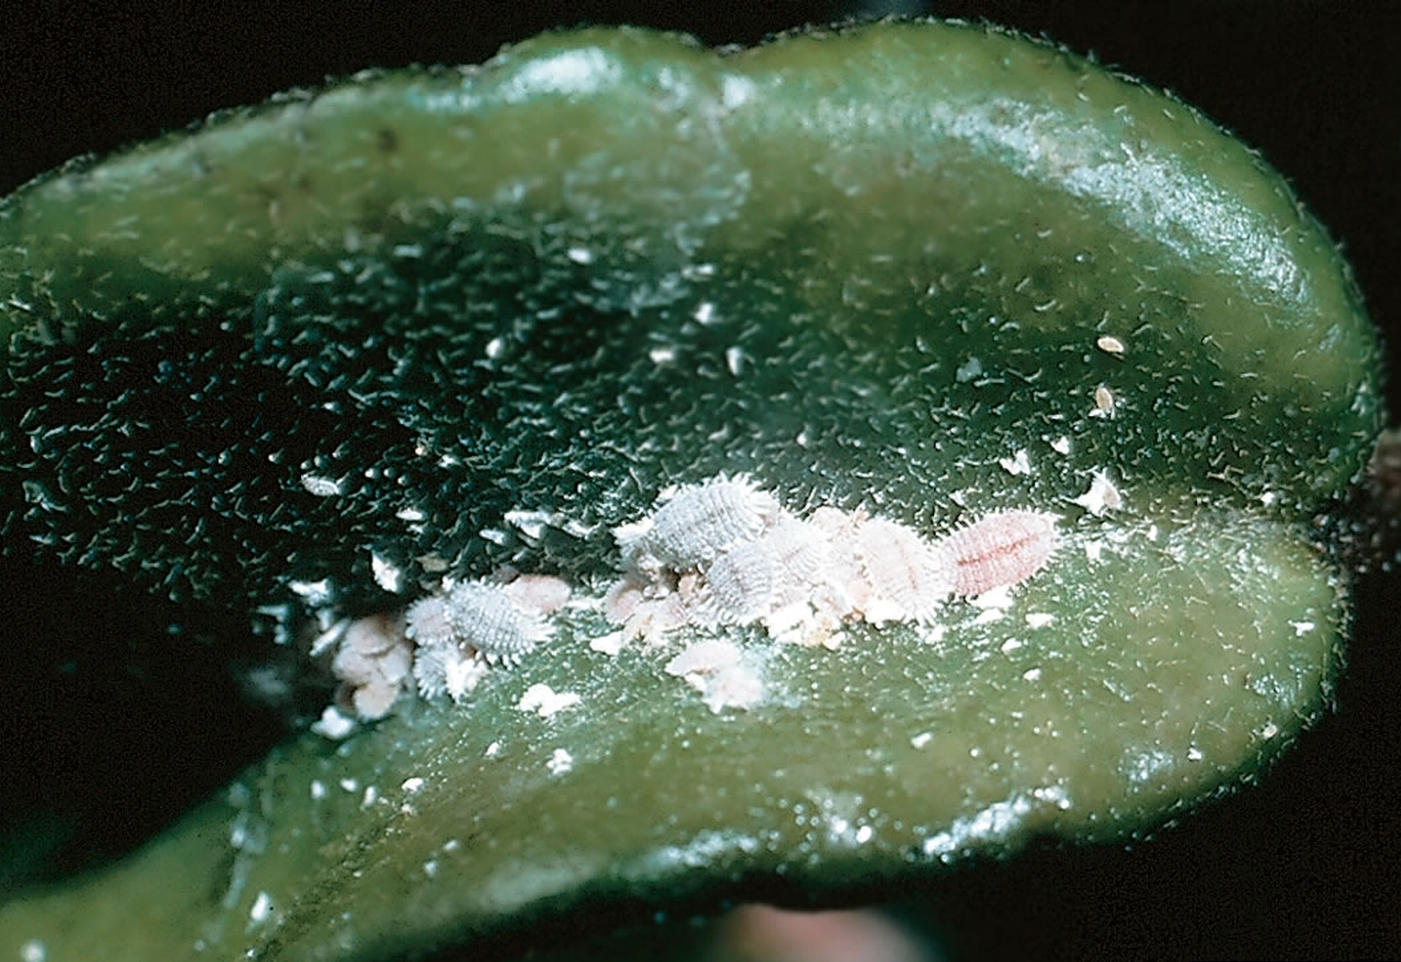 Mealybugs have a cottony appearance